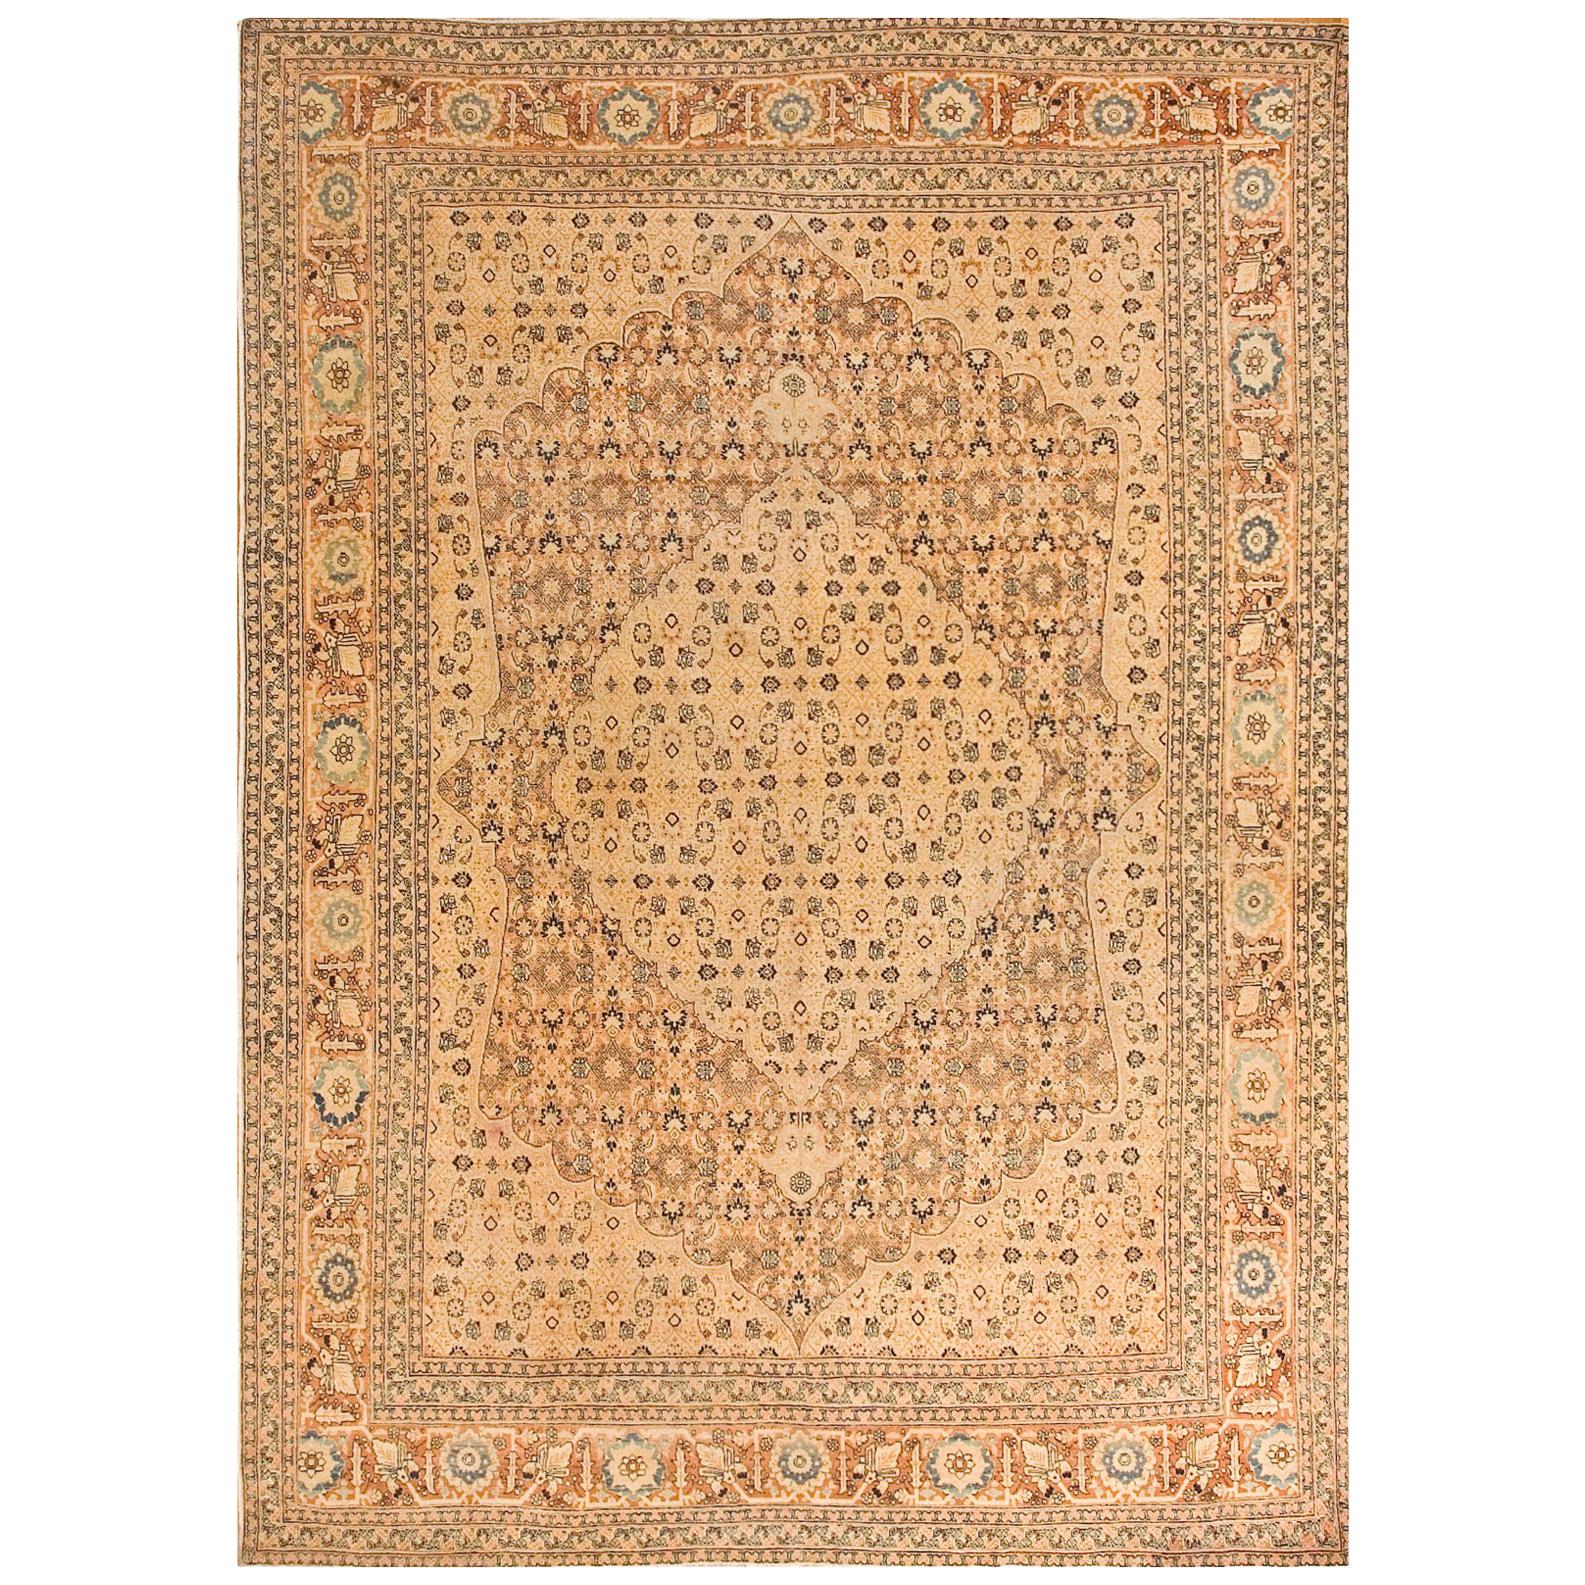 19th Century Persian Tabriz Haji Jalili Carpet ( 7'2" x 10'2" - 218 x 310 ) For Sale